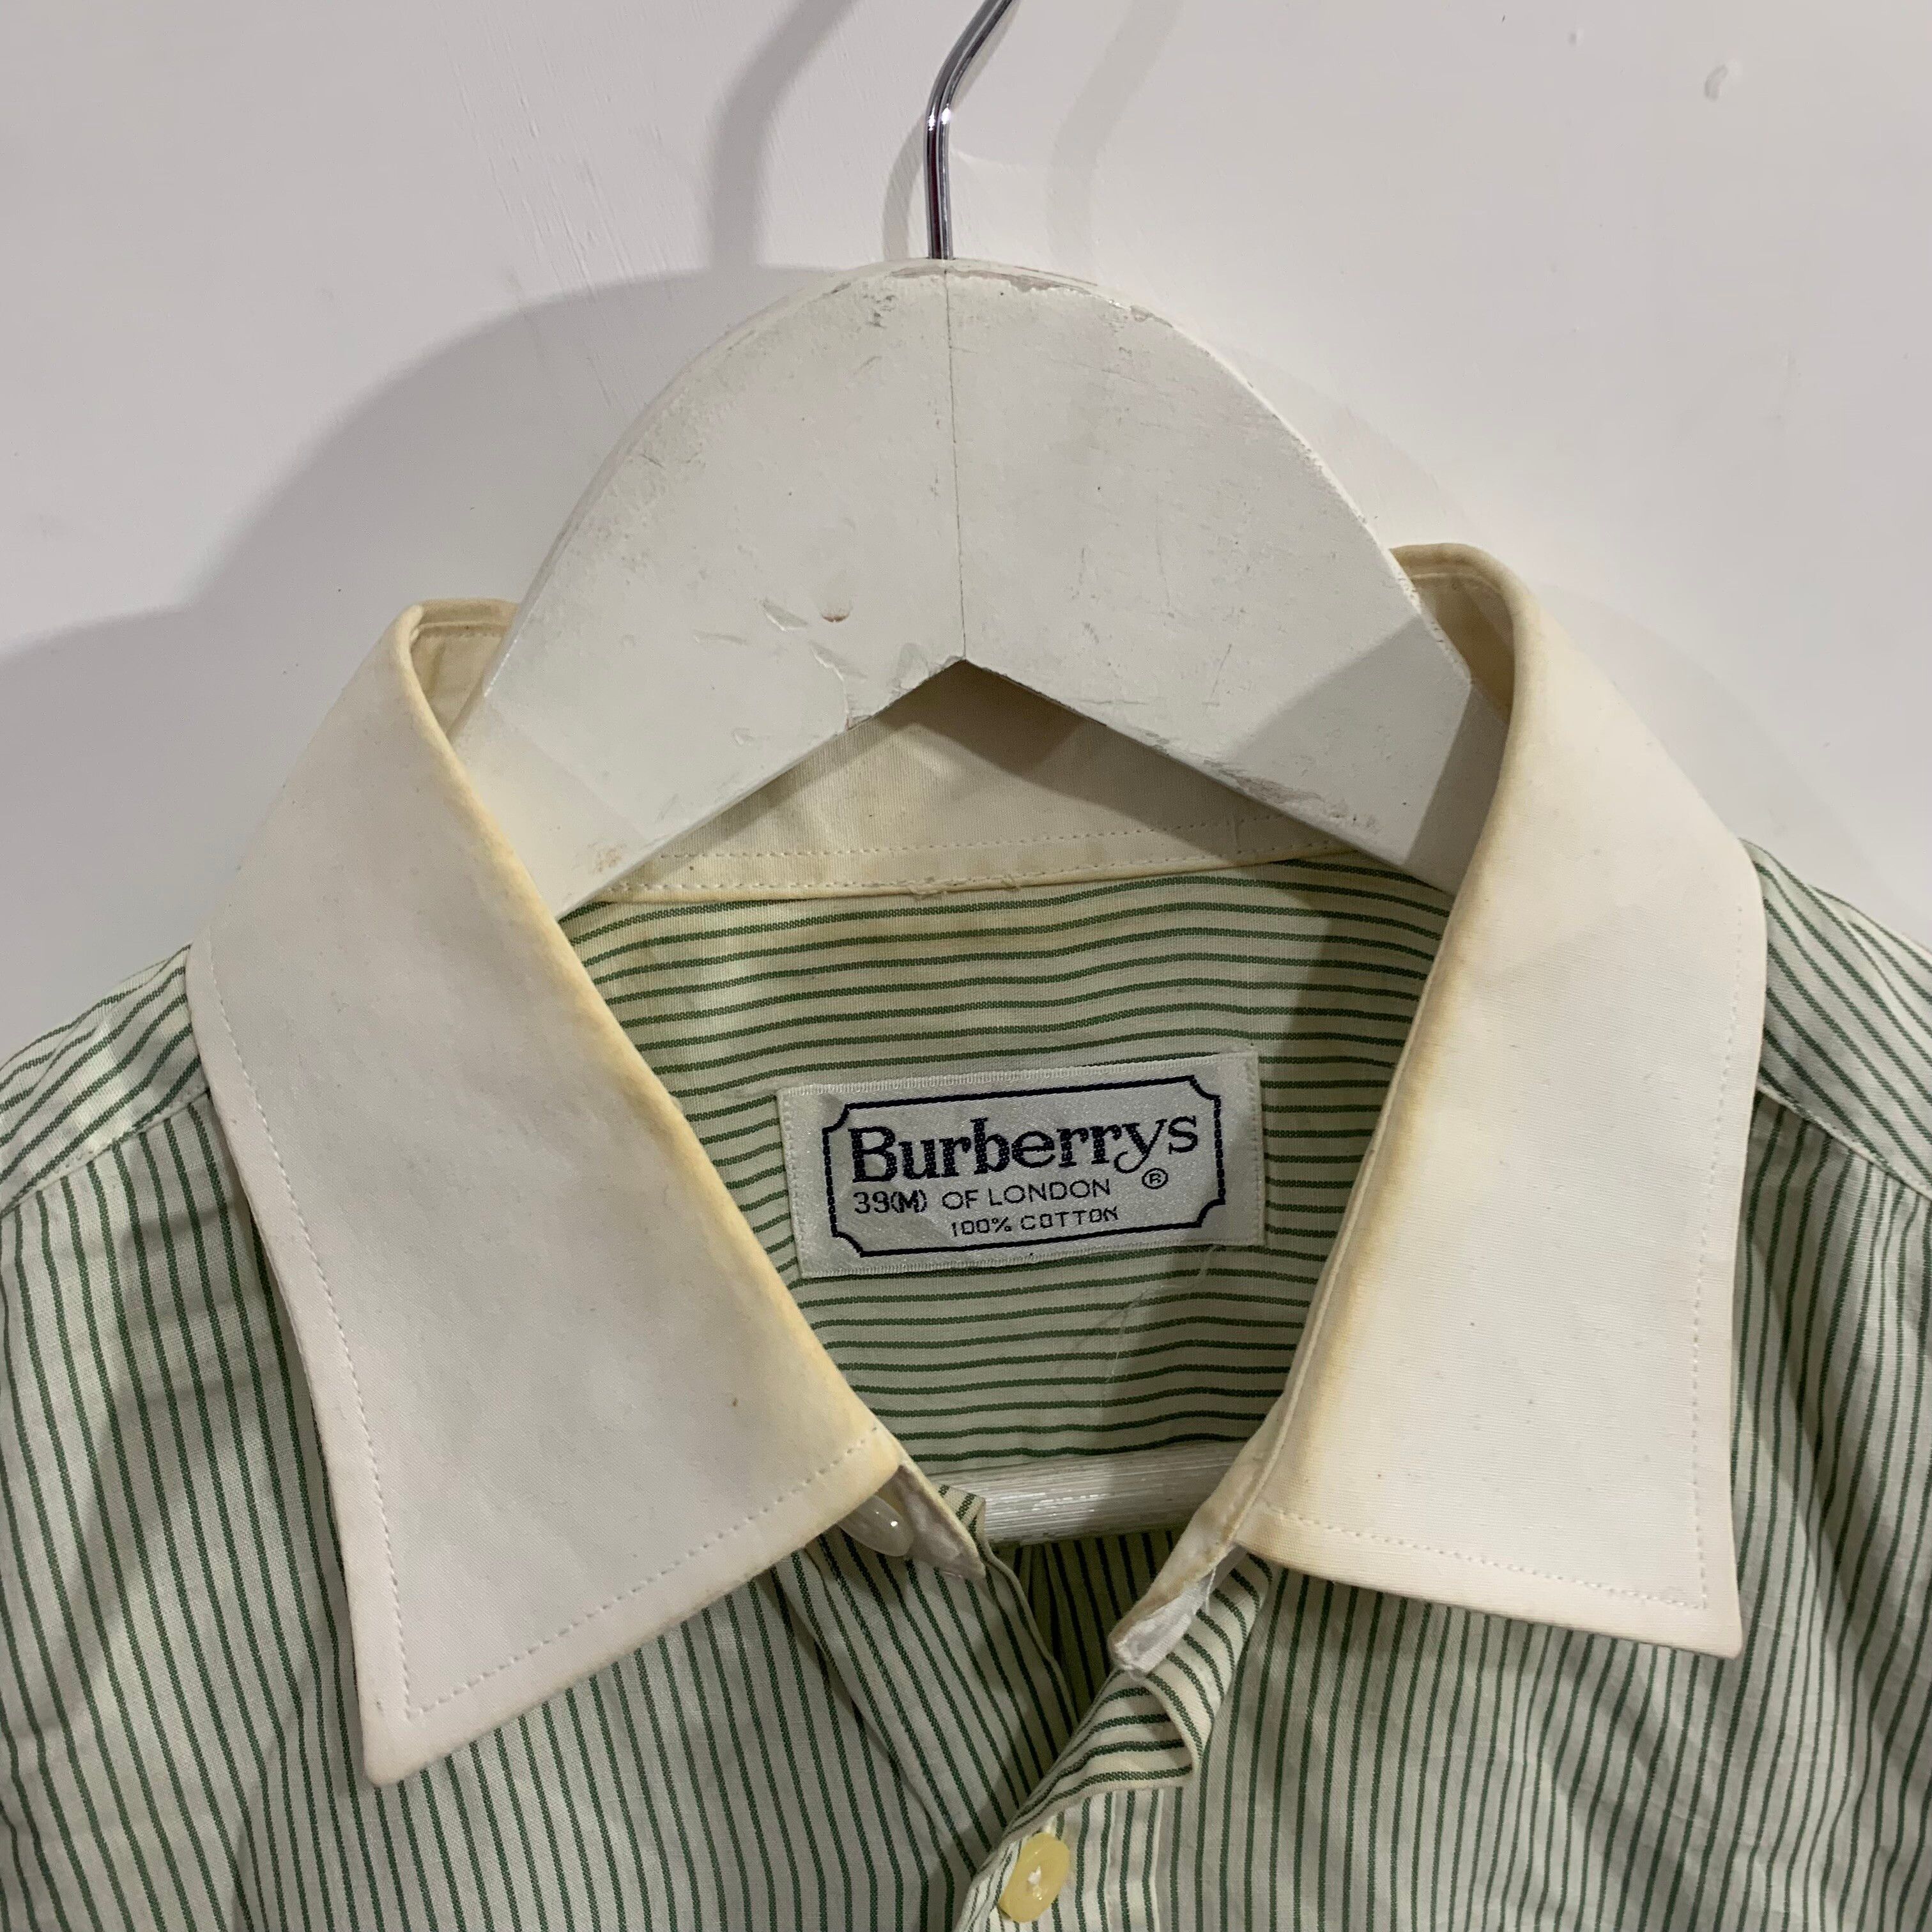 Burberry Vintage Burberry Striped Longsleeve Shirt Button Up Size US L / EU 52-54 / 3 - 6 Thumbnail